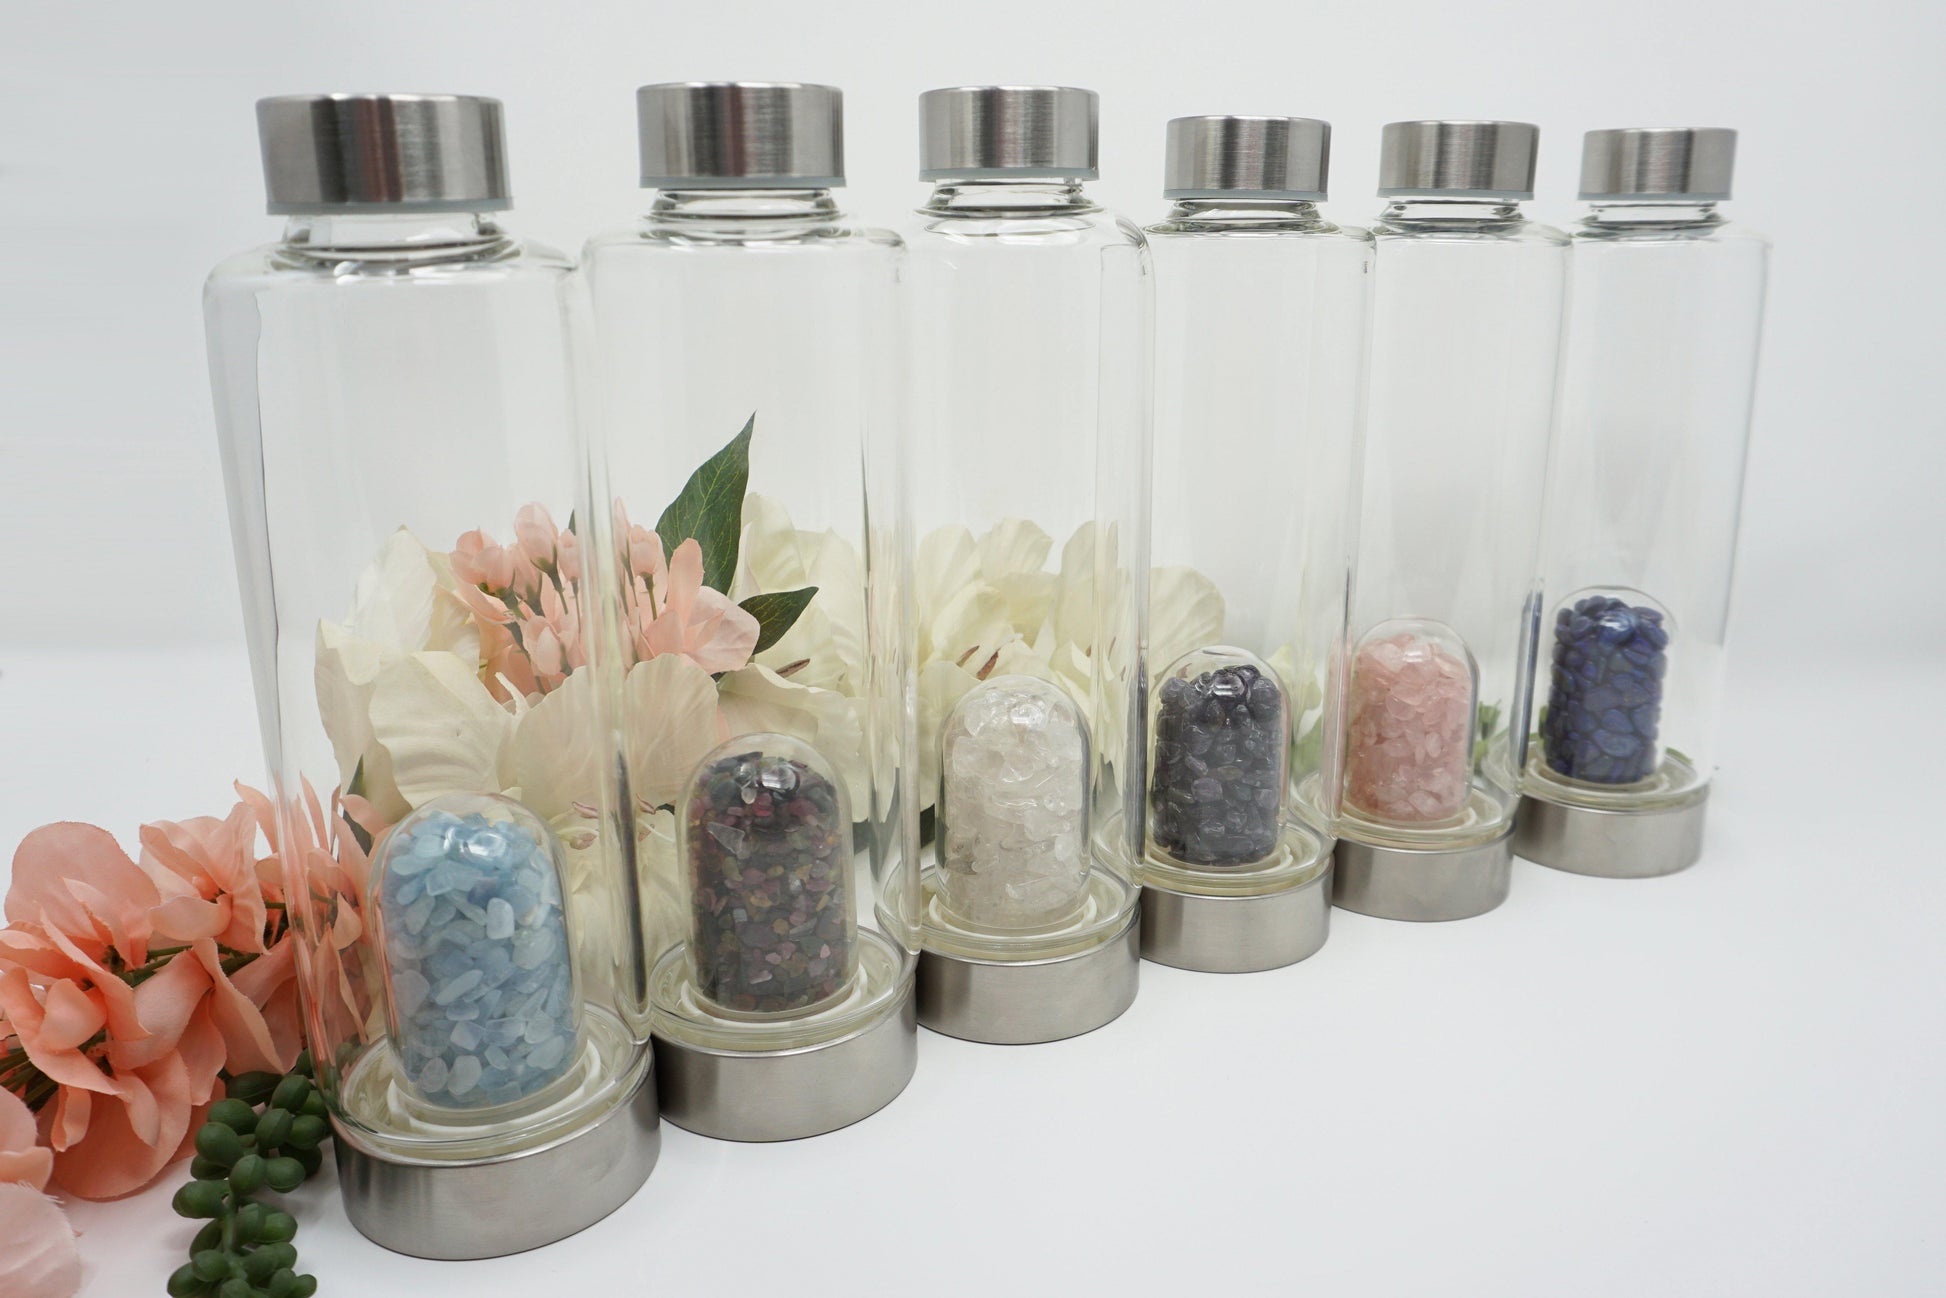 Gemstone Glass Water Bottle. With crystal glass inserts! Rose quartz, aquamarine, lapis lazuli, multi-color tourmaline, clear quartz and amethyst variants.